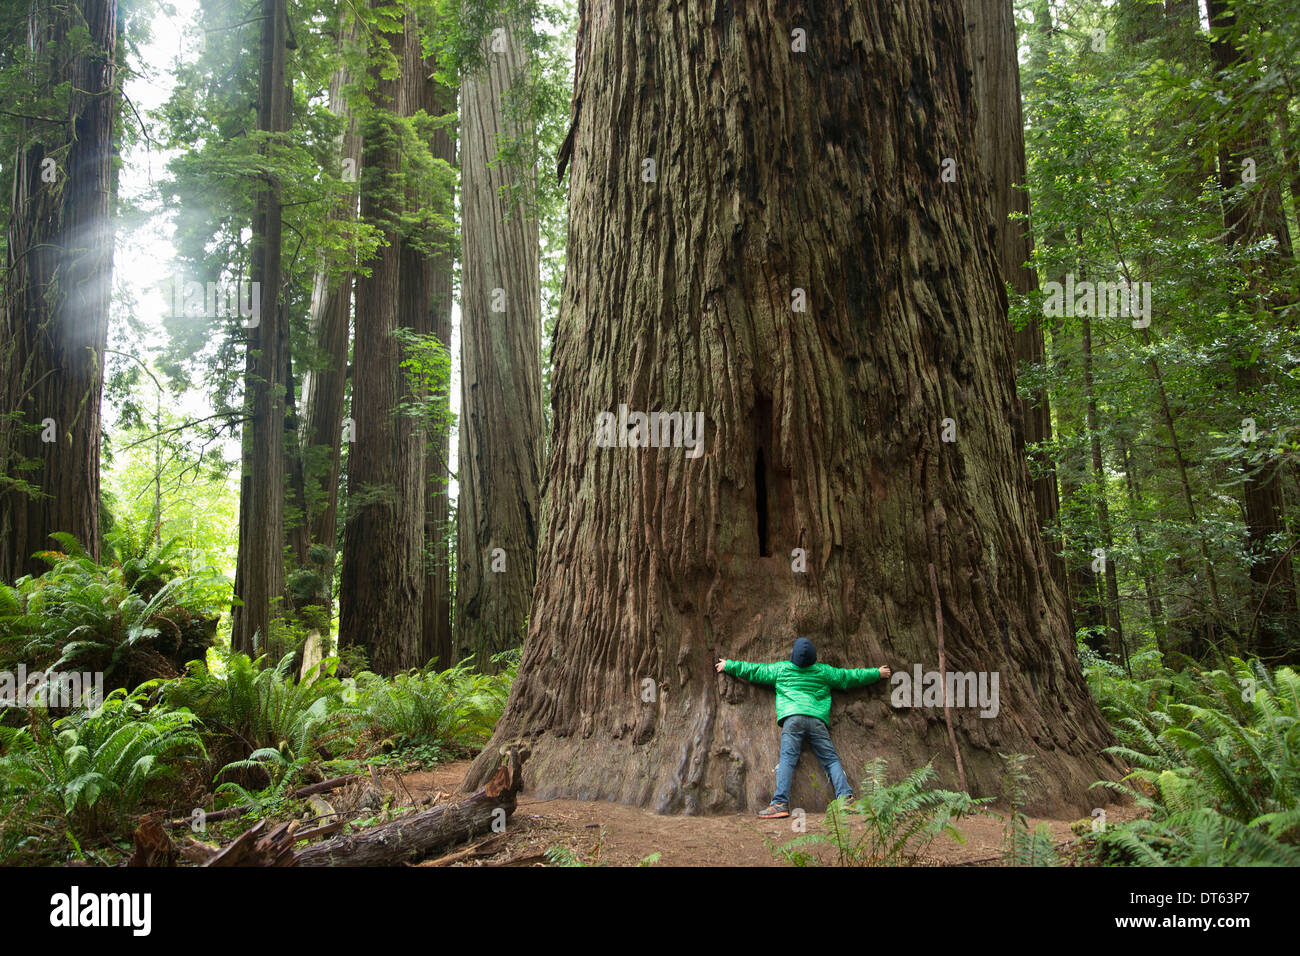 Boy hugging tree trunk, Redwoods National Park, California, USA Banque D'Images